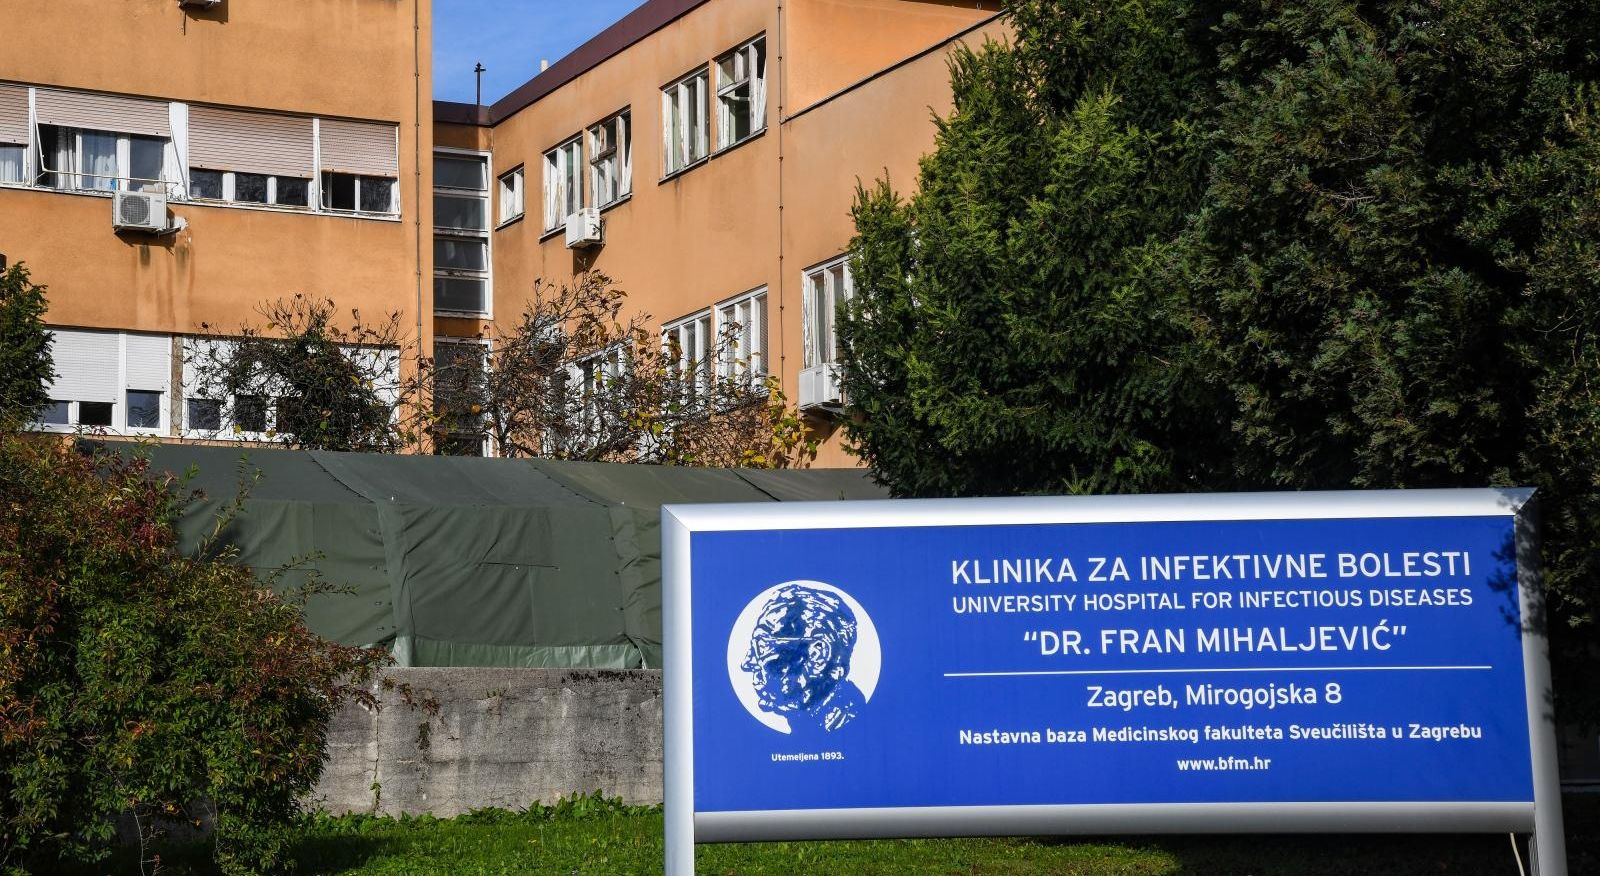 02.11.2020., Zagreb - Hrvatska vojska postavlja sator kod Klinike za infektivne bolesti Dr. Fran Mihaljevic. 
Photo: Josip Regovic/PIXSELL